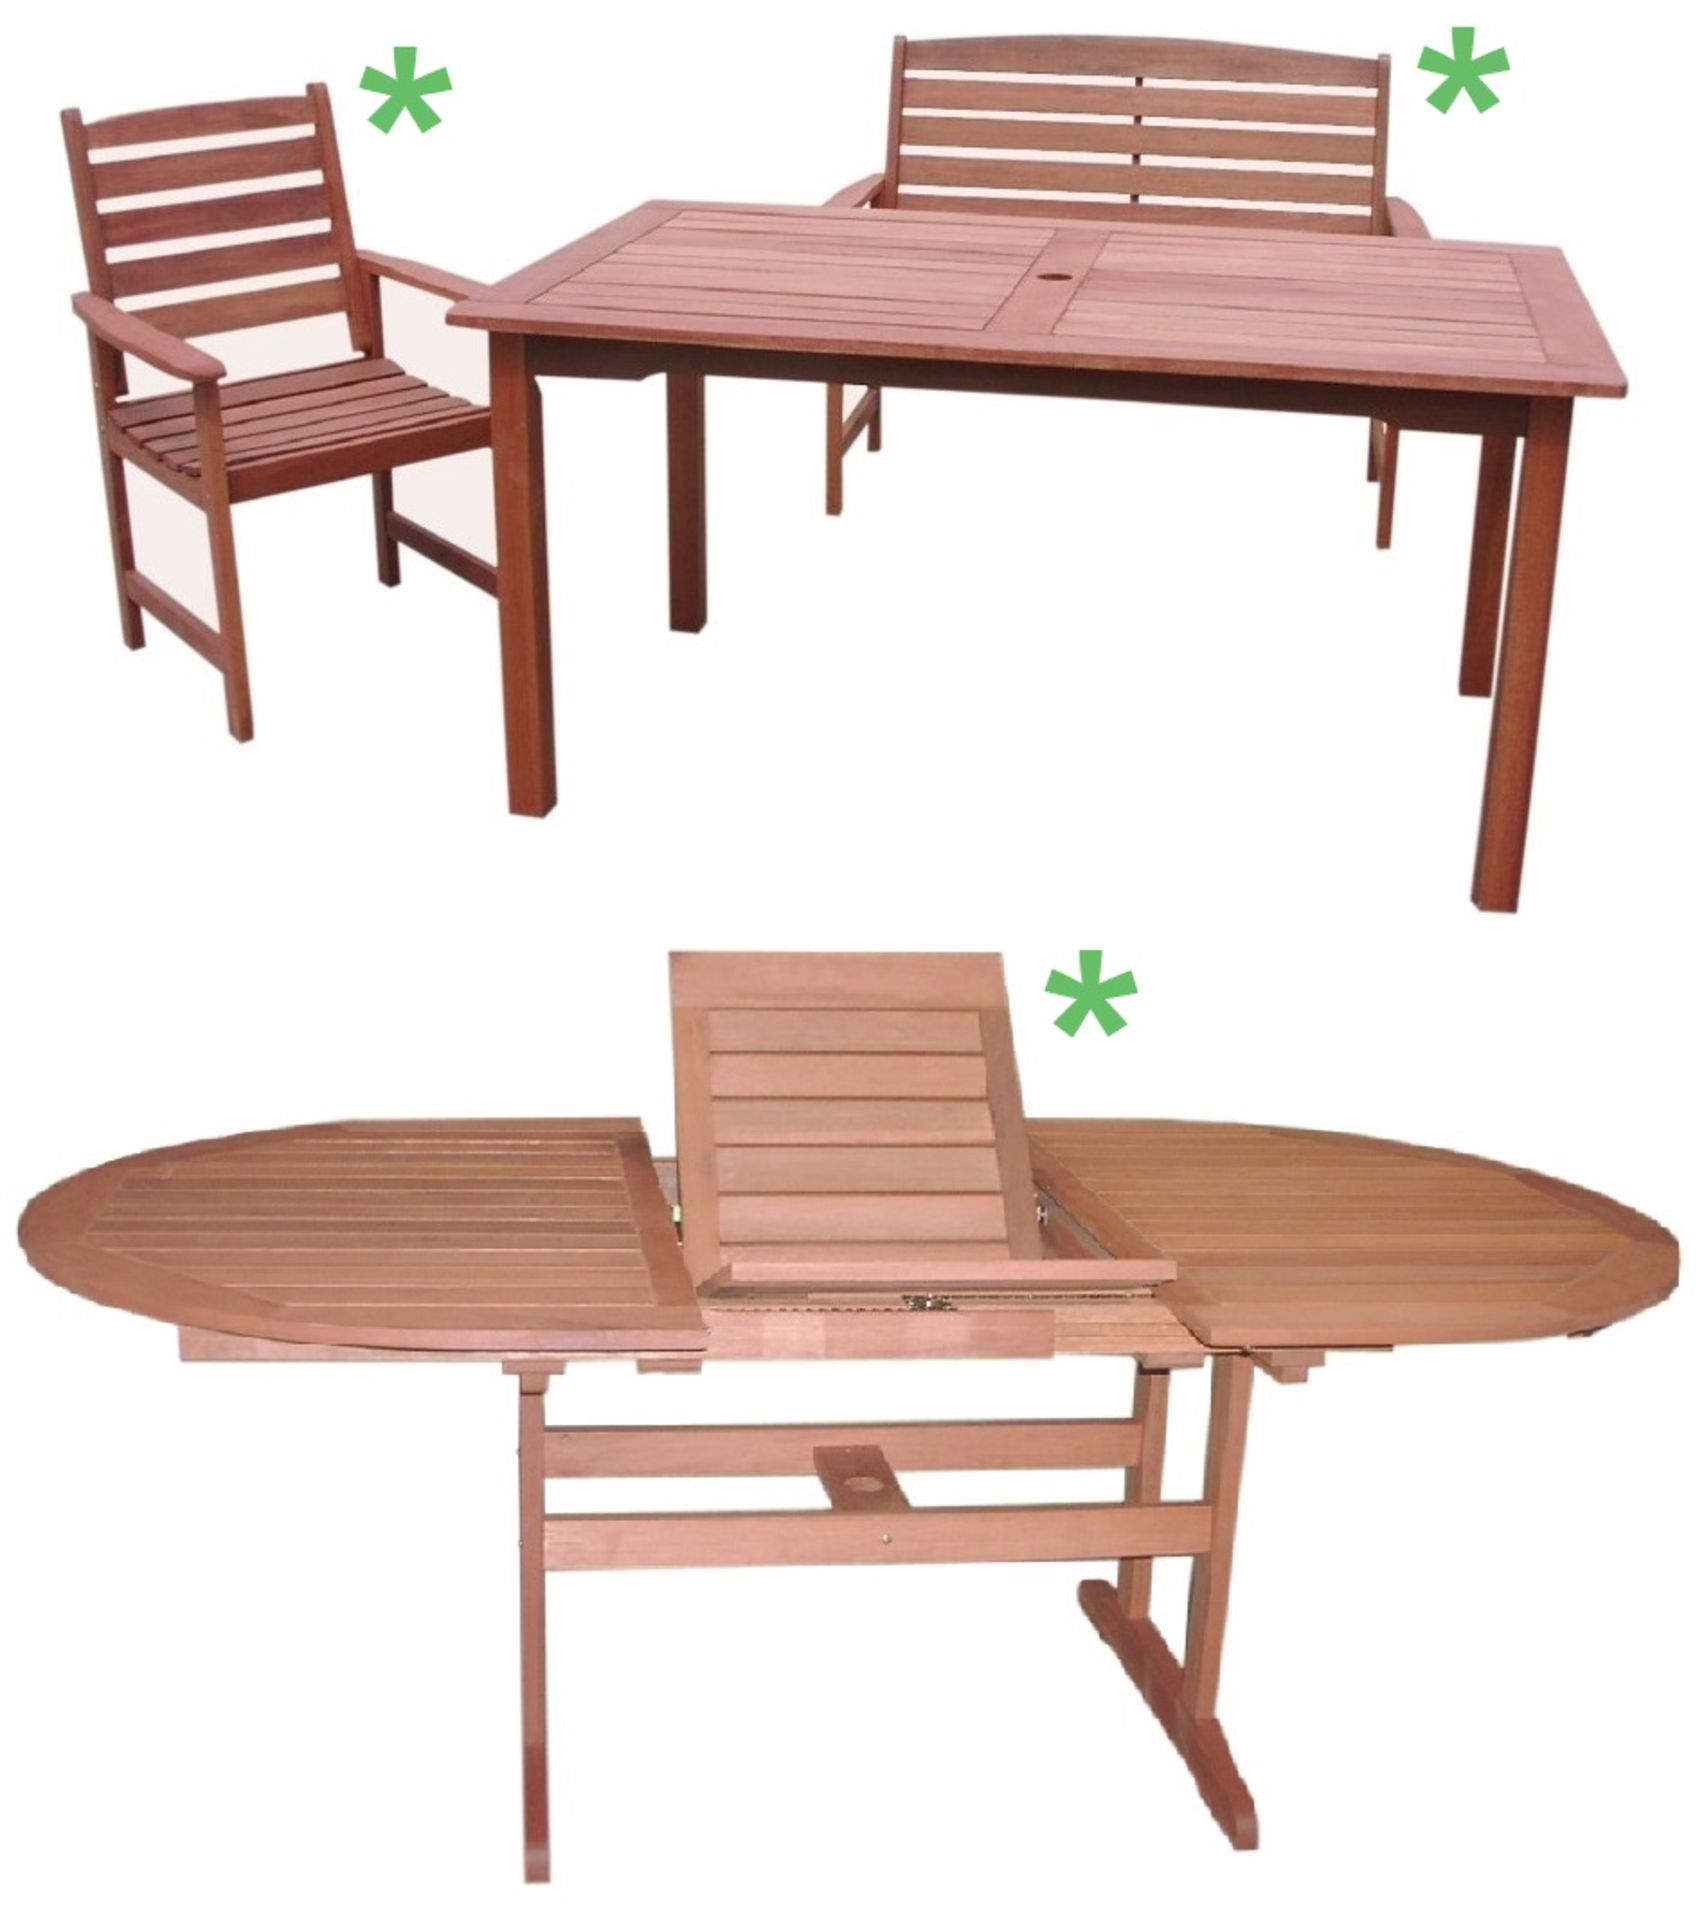 1 x 3-Piece "Macau Nassau" Garden Furniture Set - Includes Bench, Extending Table & 3 x Arm Chairs -